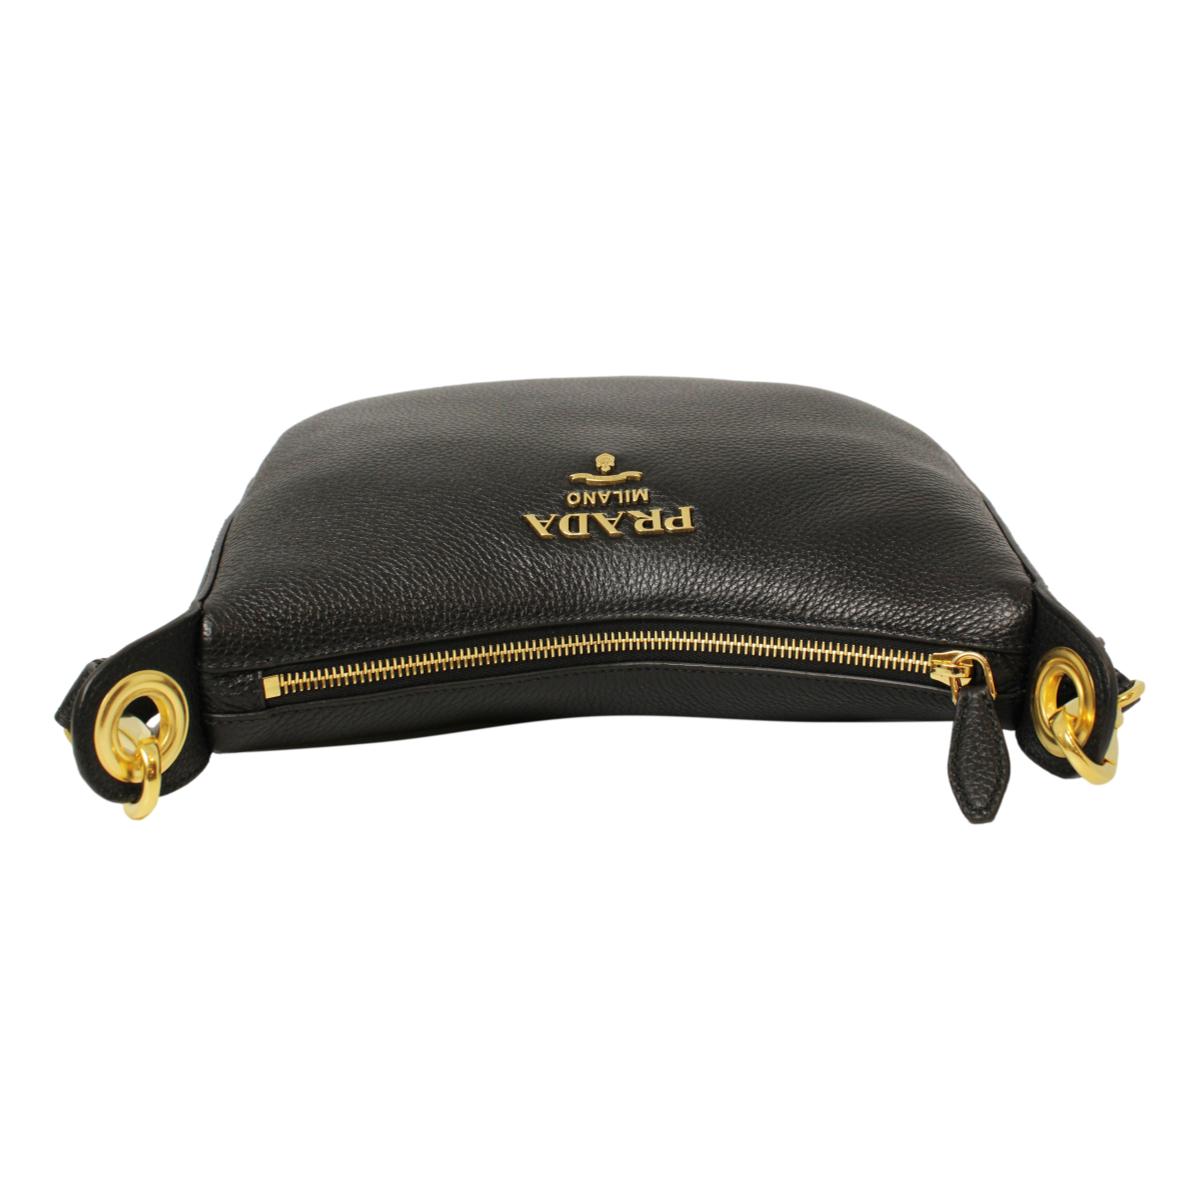 Prada Black Vitello Phenix Leather Shoulder Camera Bag 1BH103: Handbags